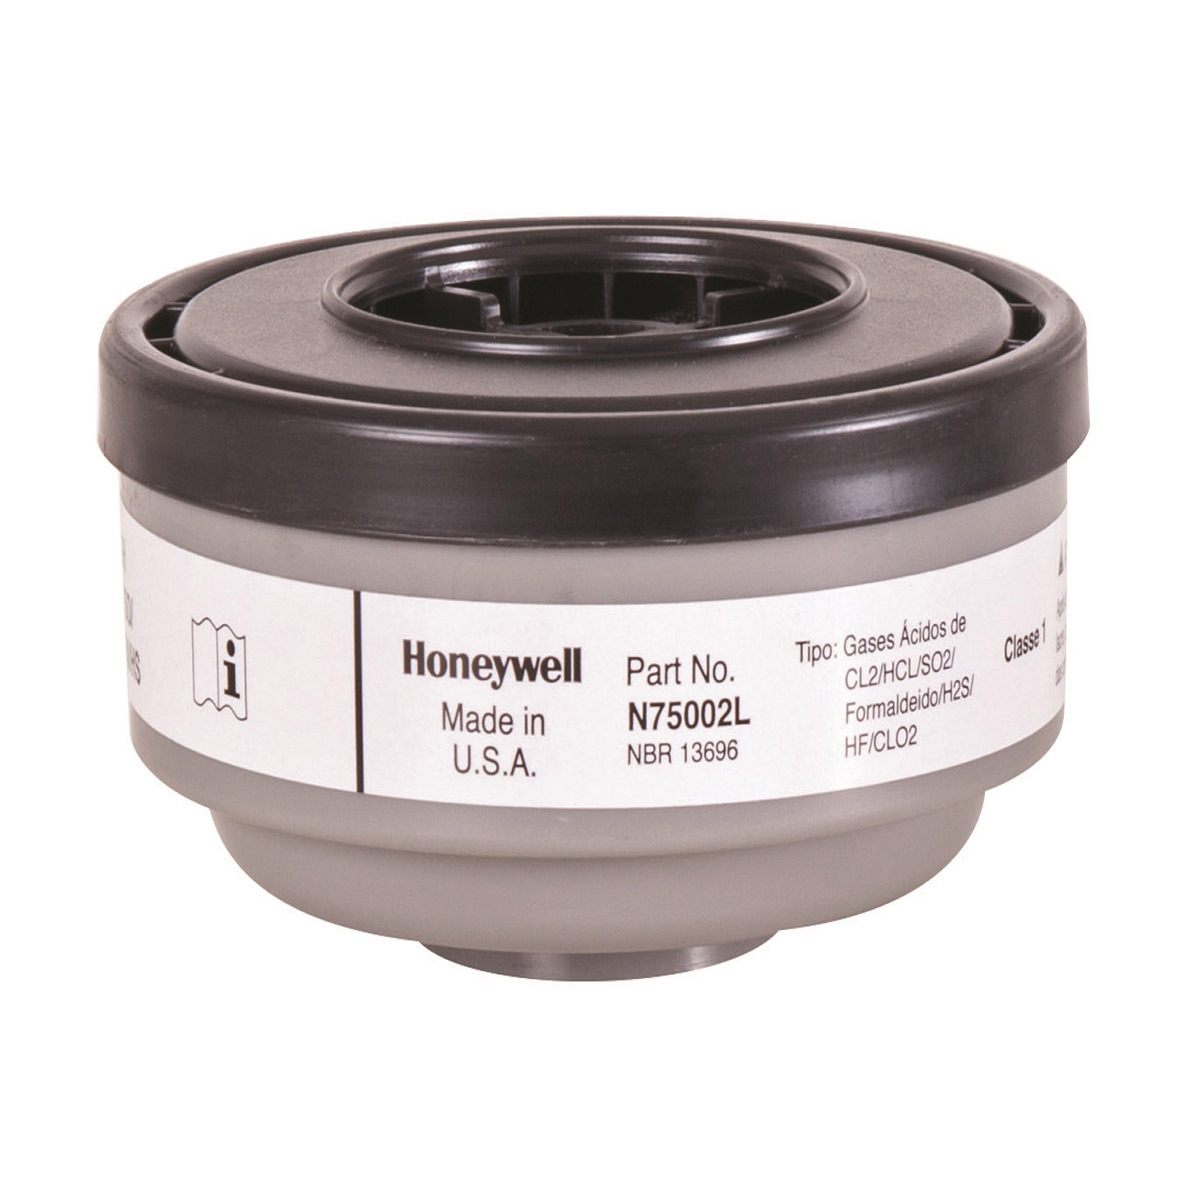 Honeywell Acid Gas Respirator Cartridge (Availability restrictions apply.)